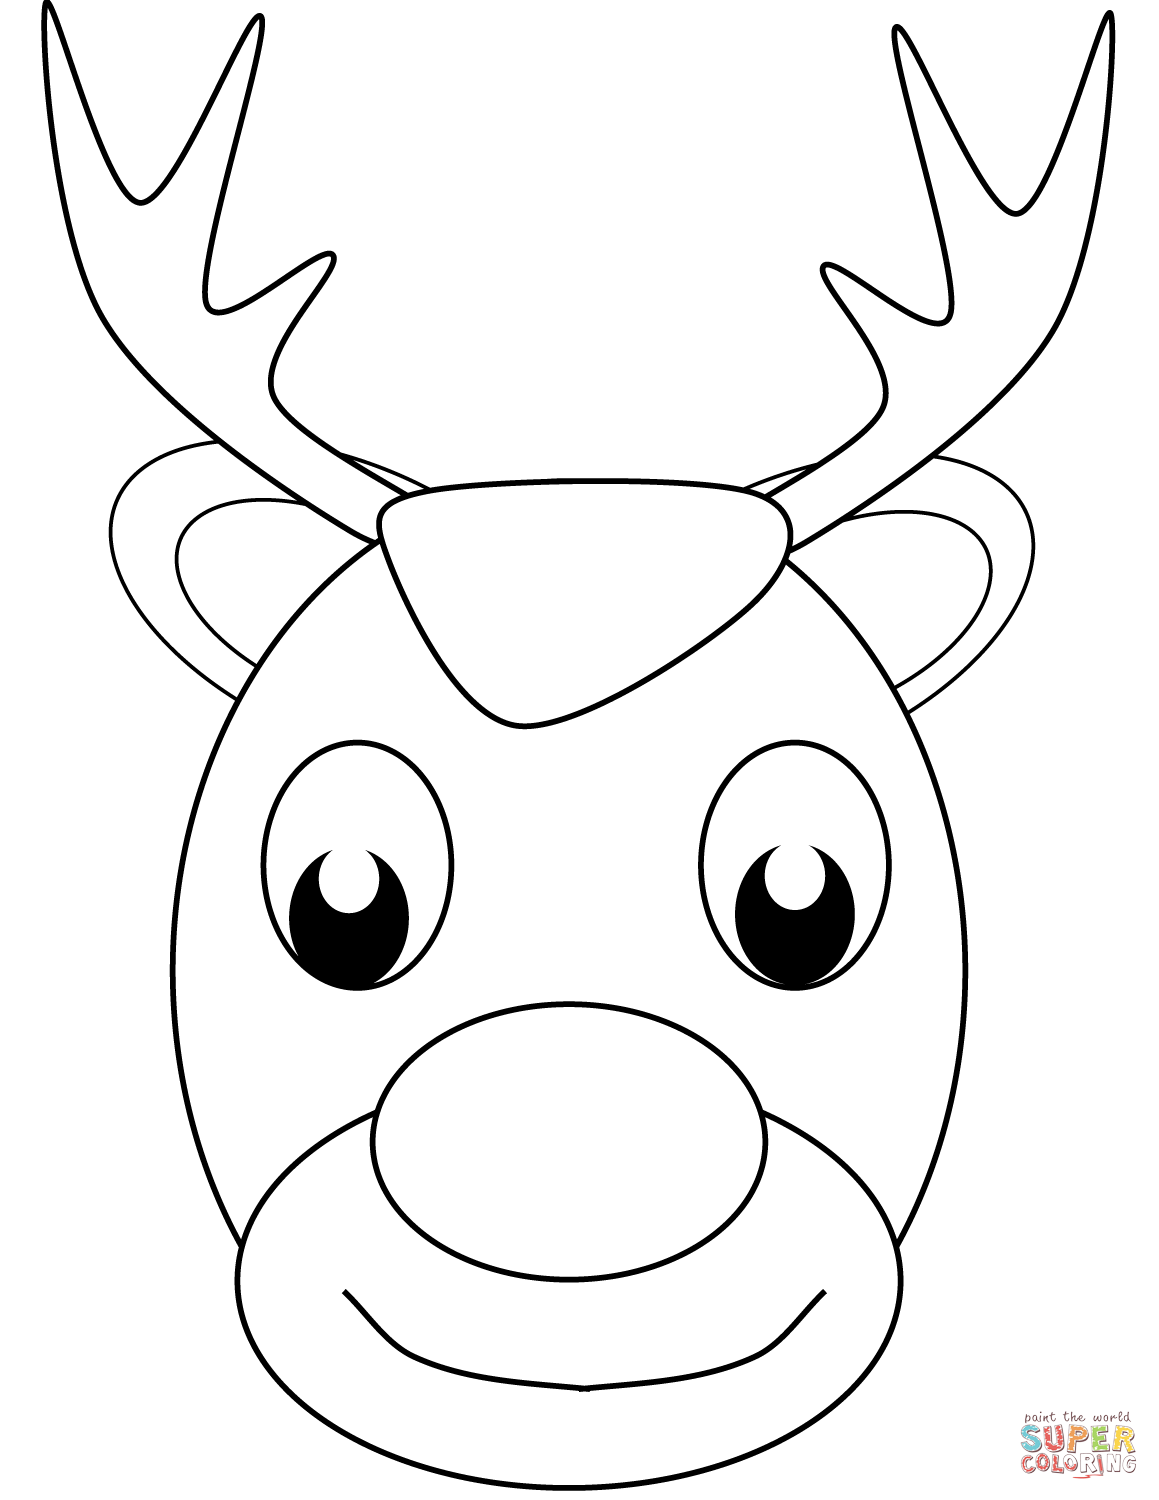 Reindeer Head Coloring Pages Printable at GetColorings.com | Free